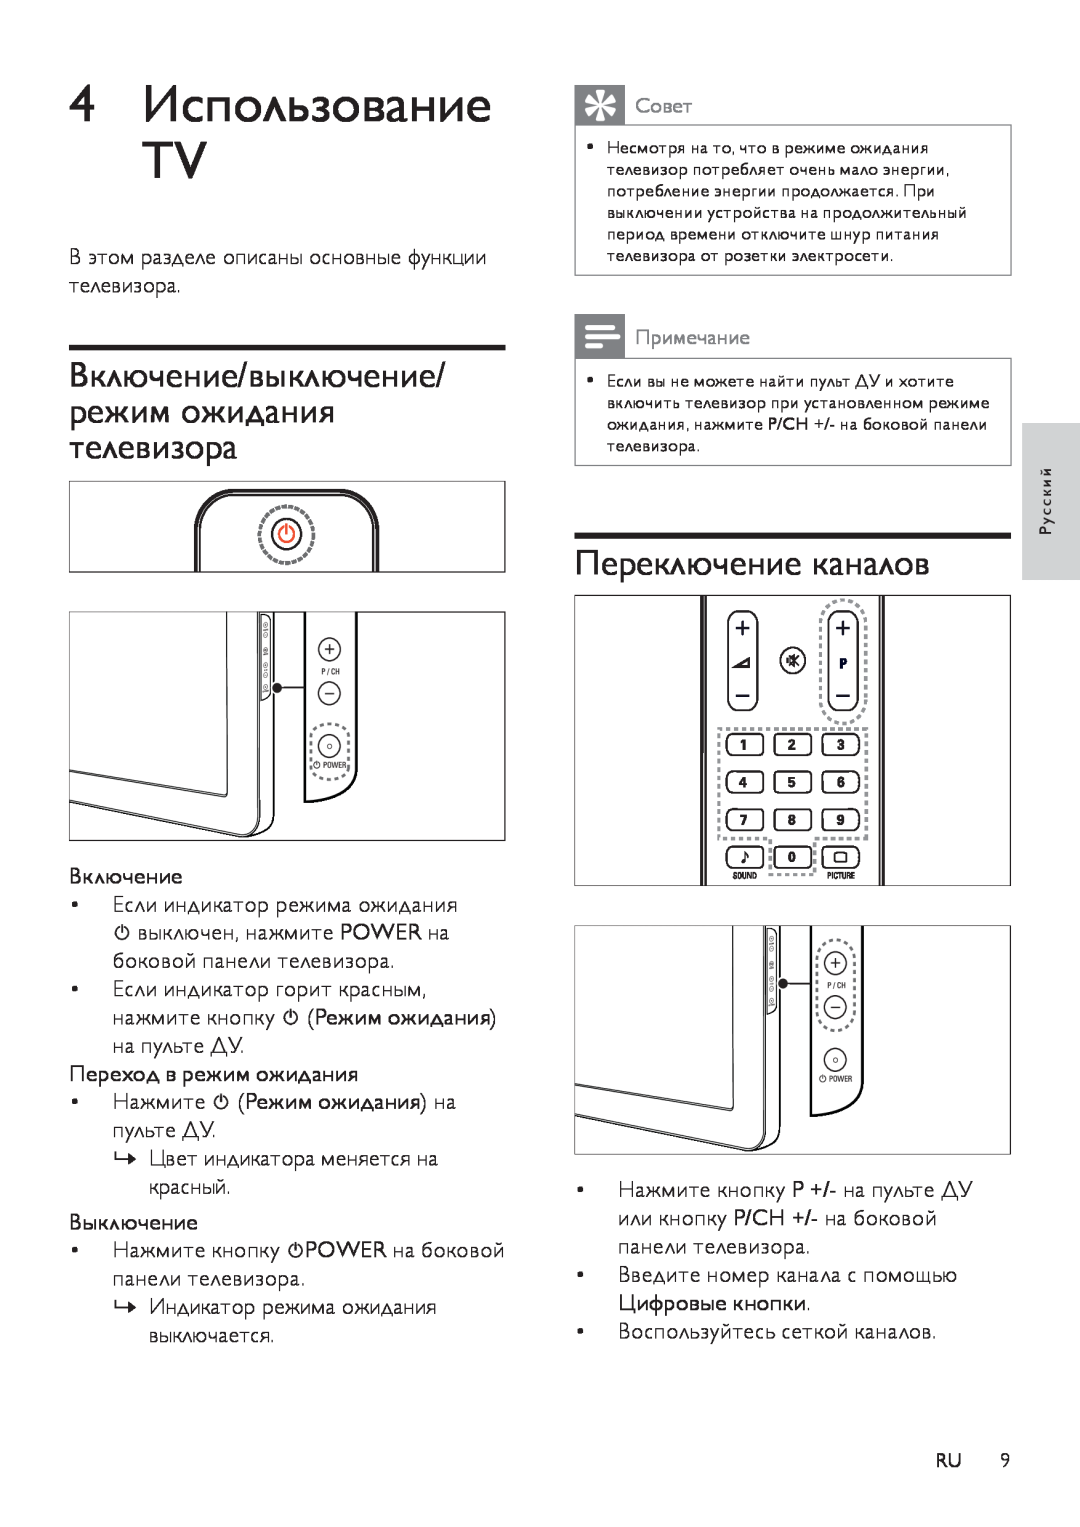 Philips 26PFL3404/60 manual 4 Использование TV, Переключение каналов, Включение/выключение/ режим ожидания телевизора 